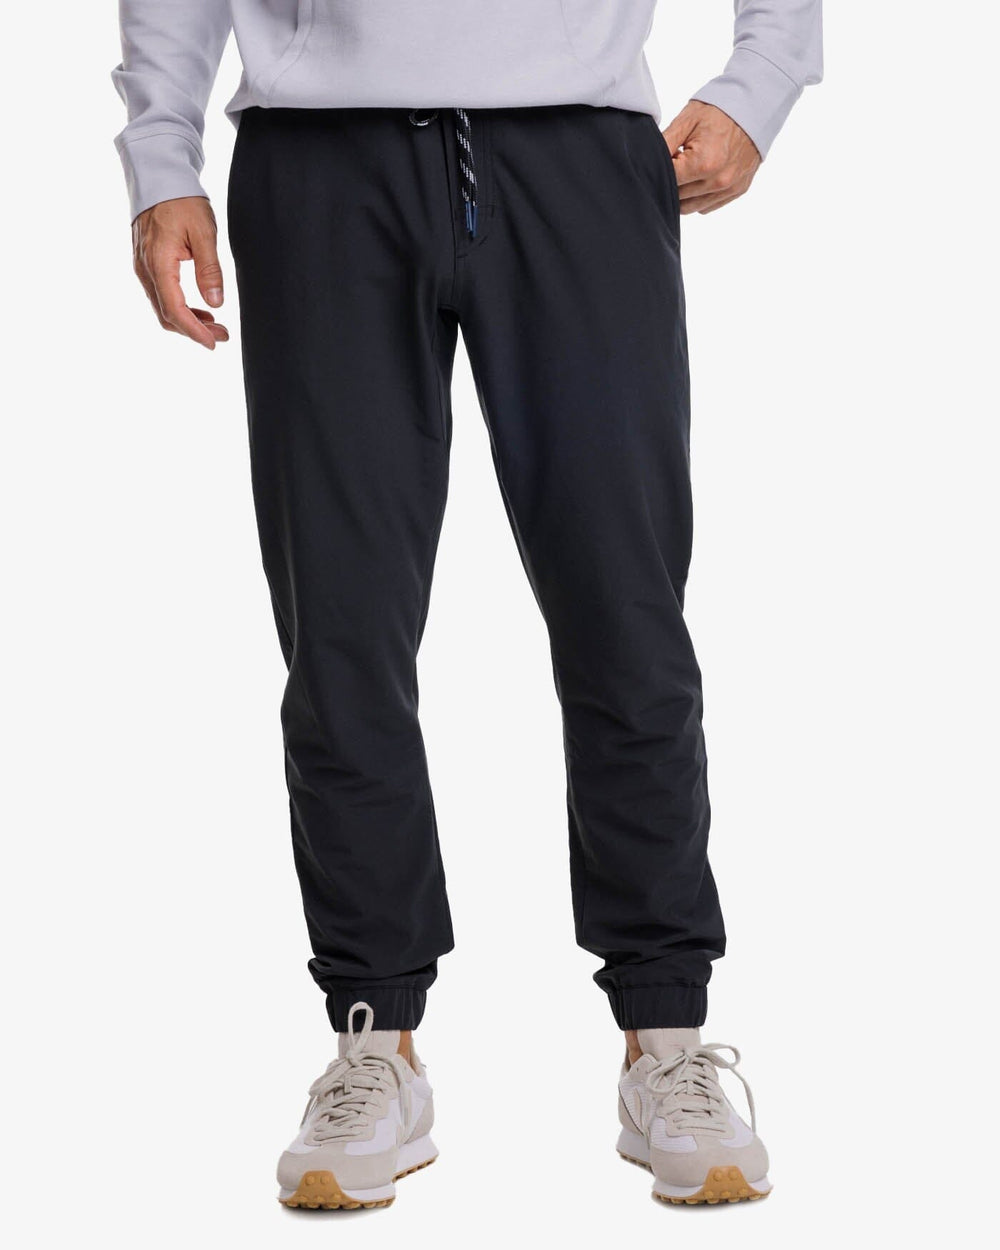 Shop Navy Blue Golf Joggers with Belt Loops | Modern Golf Pants